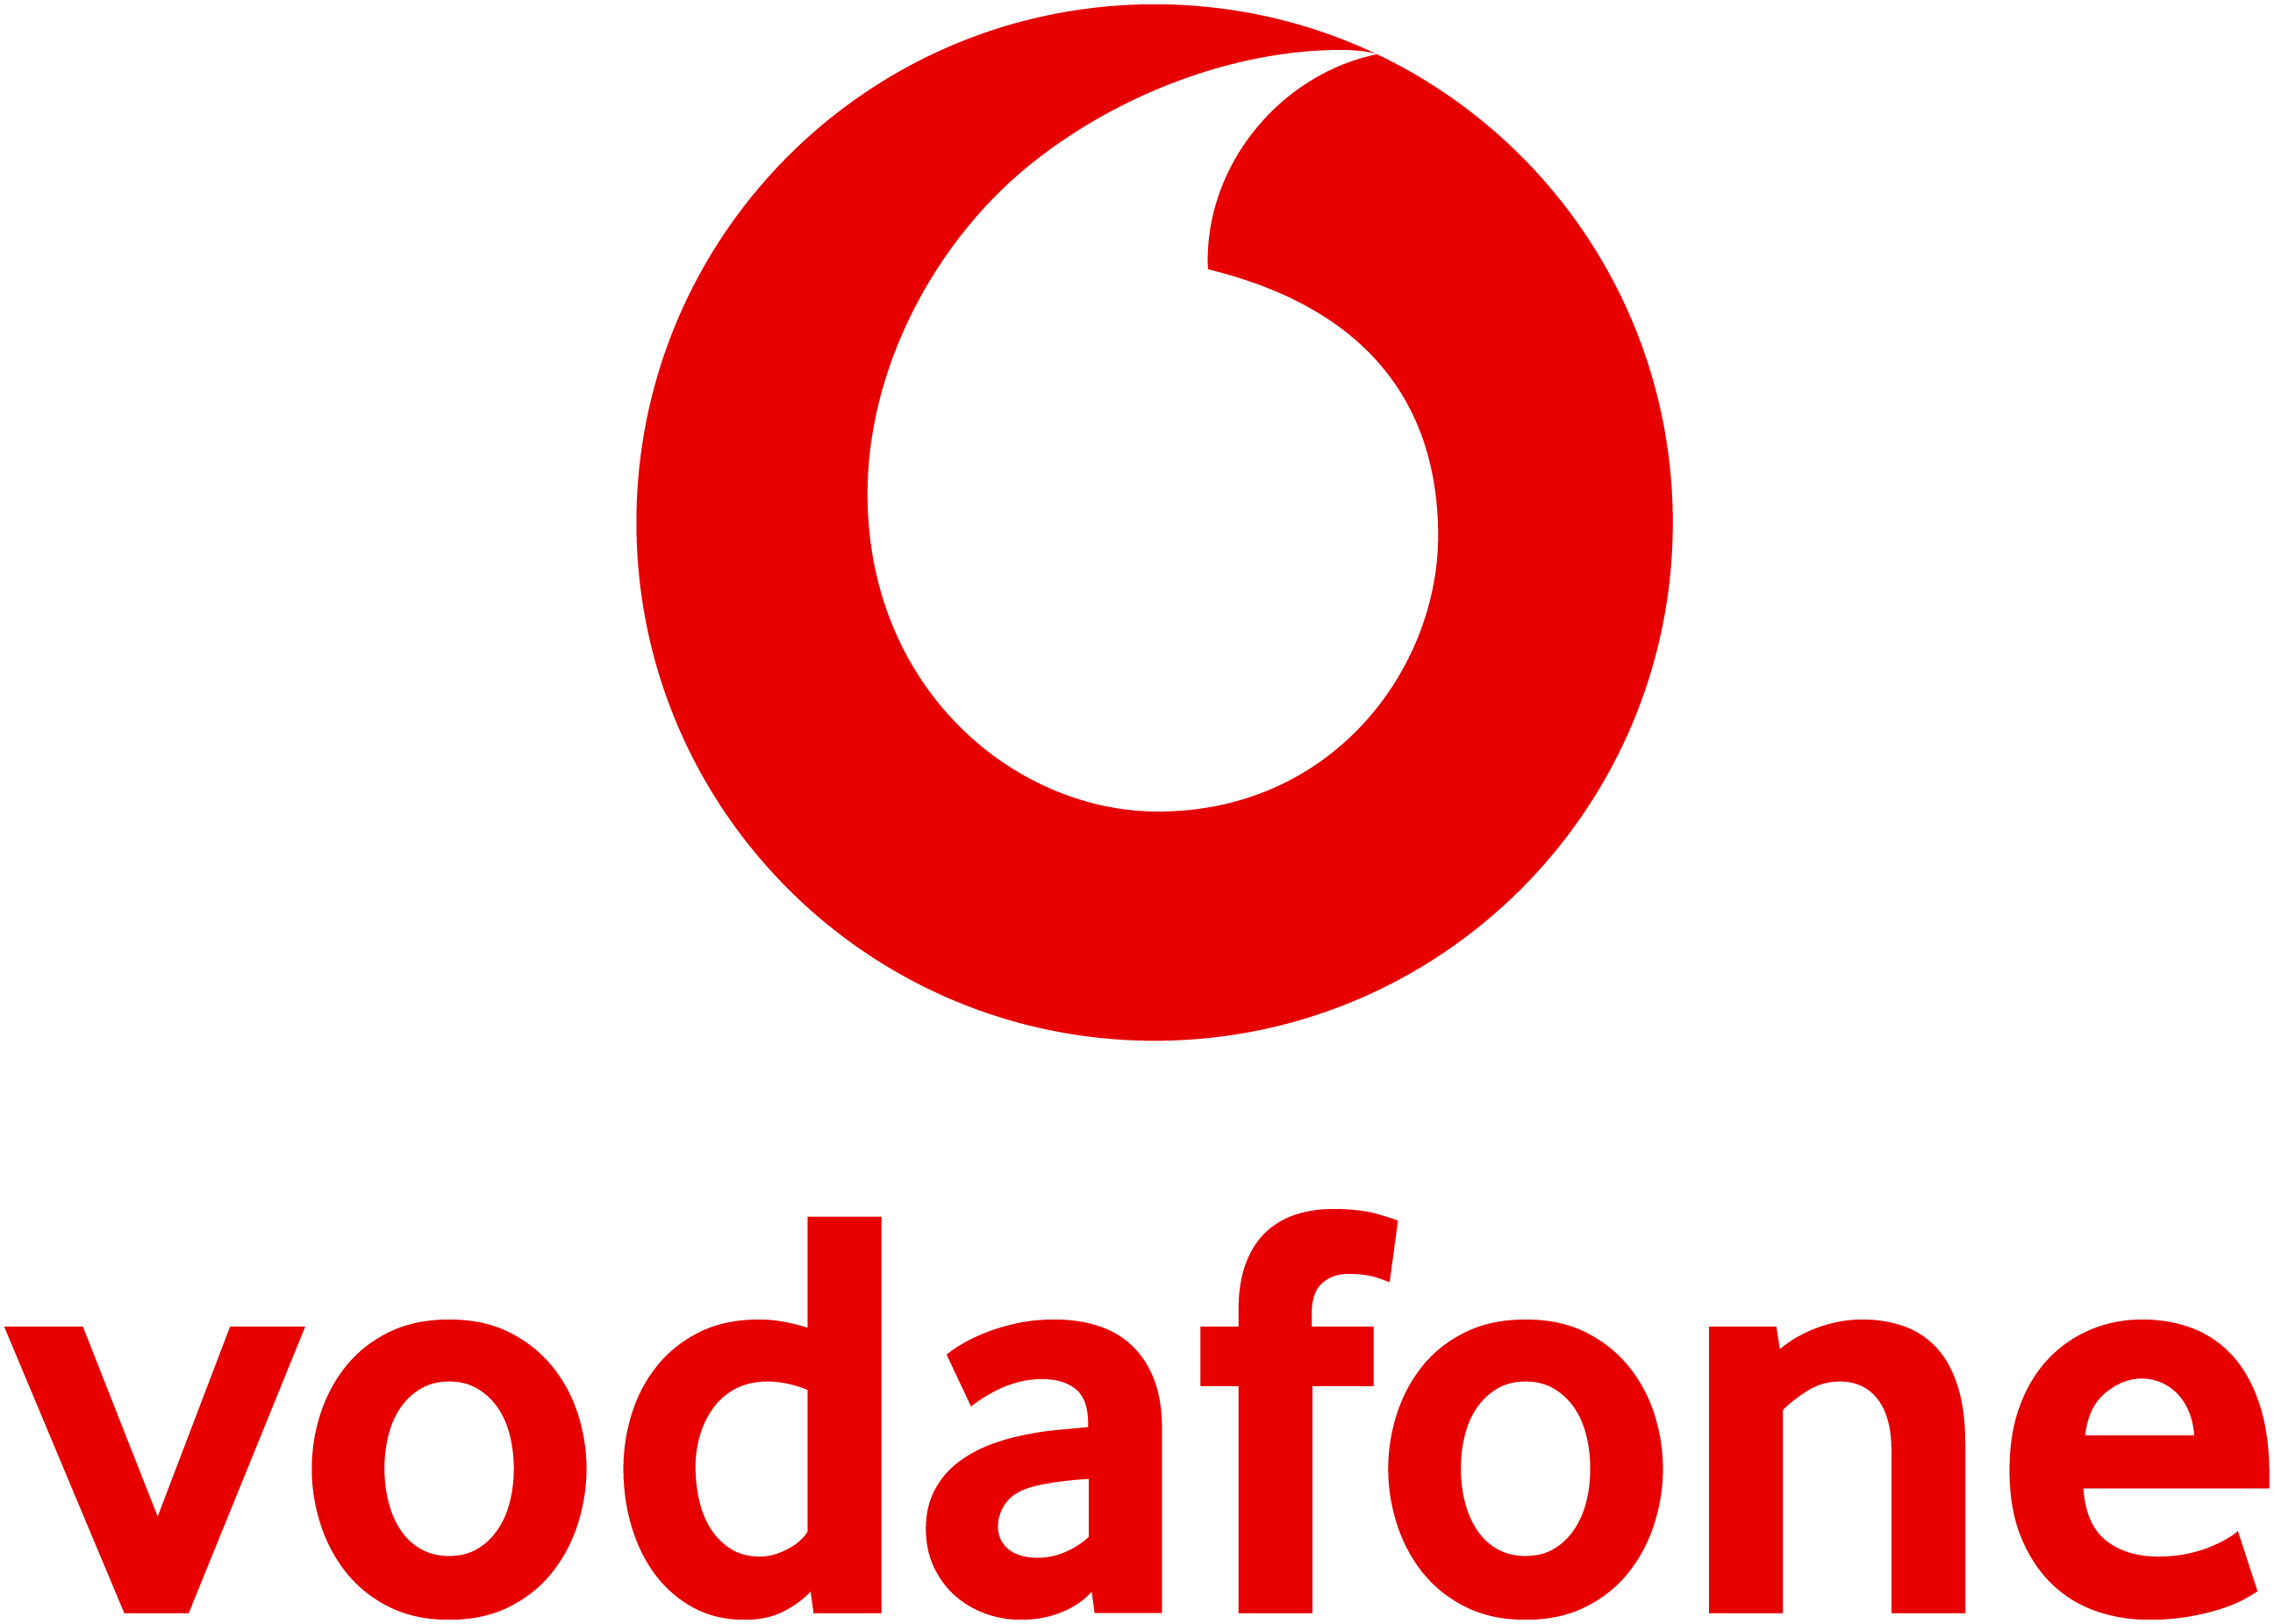 Vodafone logo.jpg